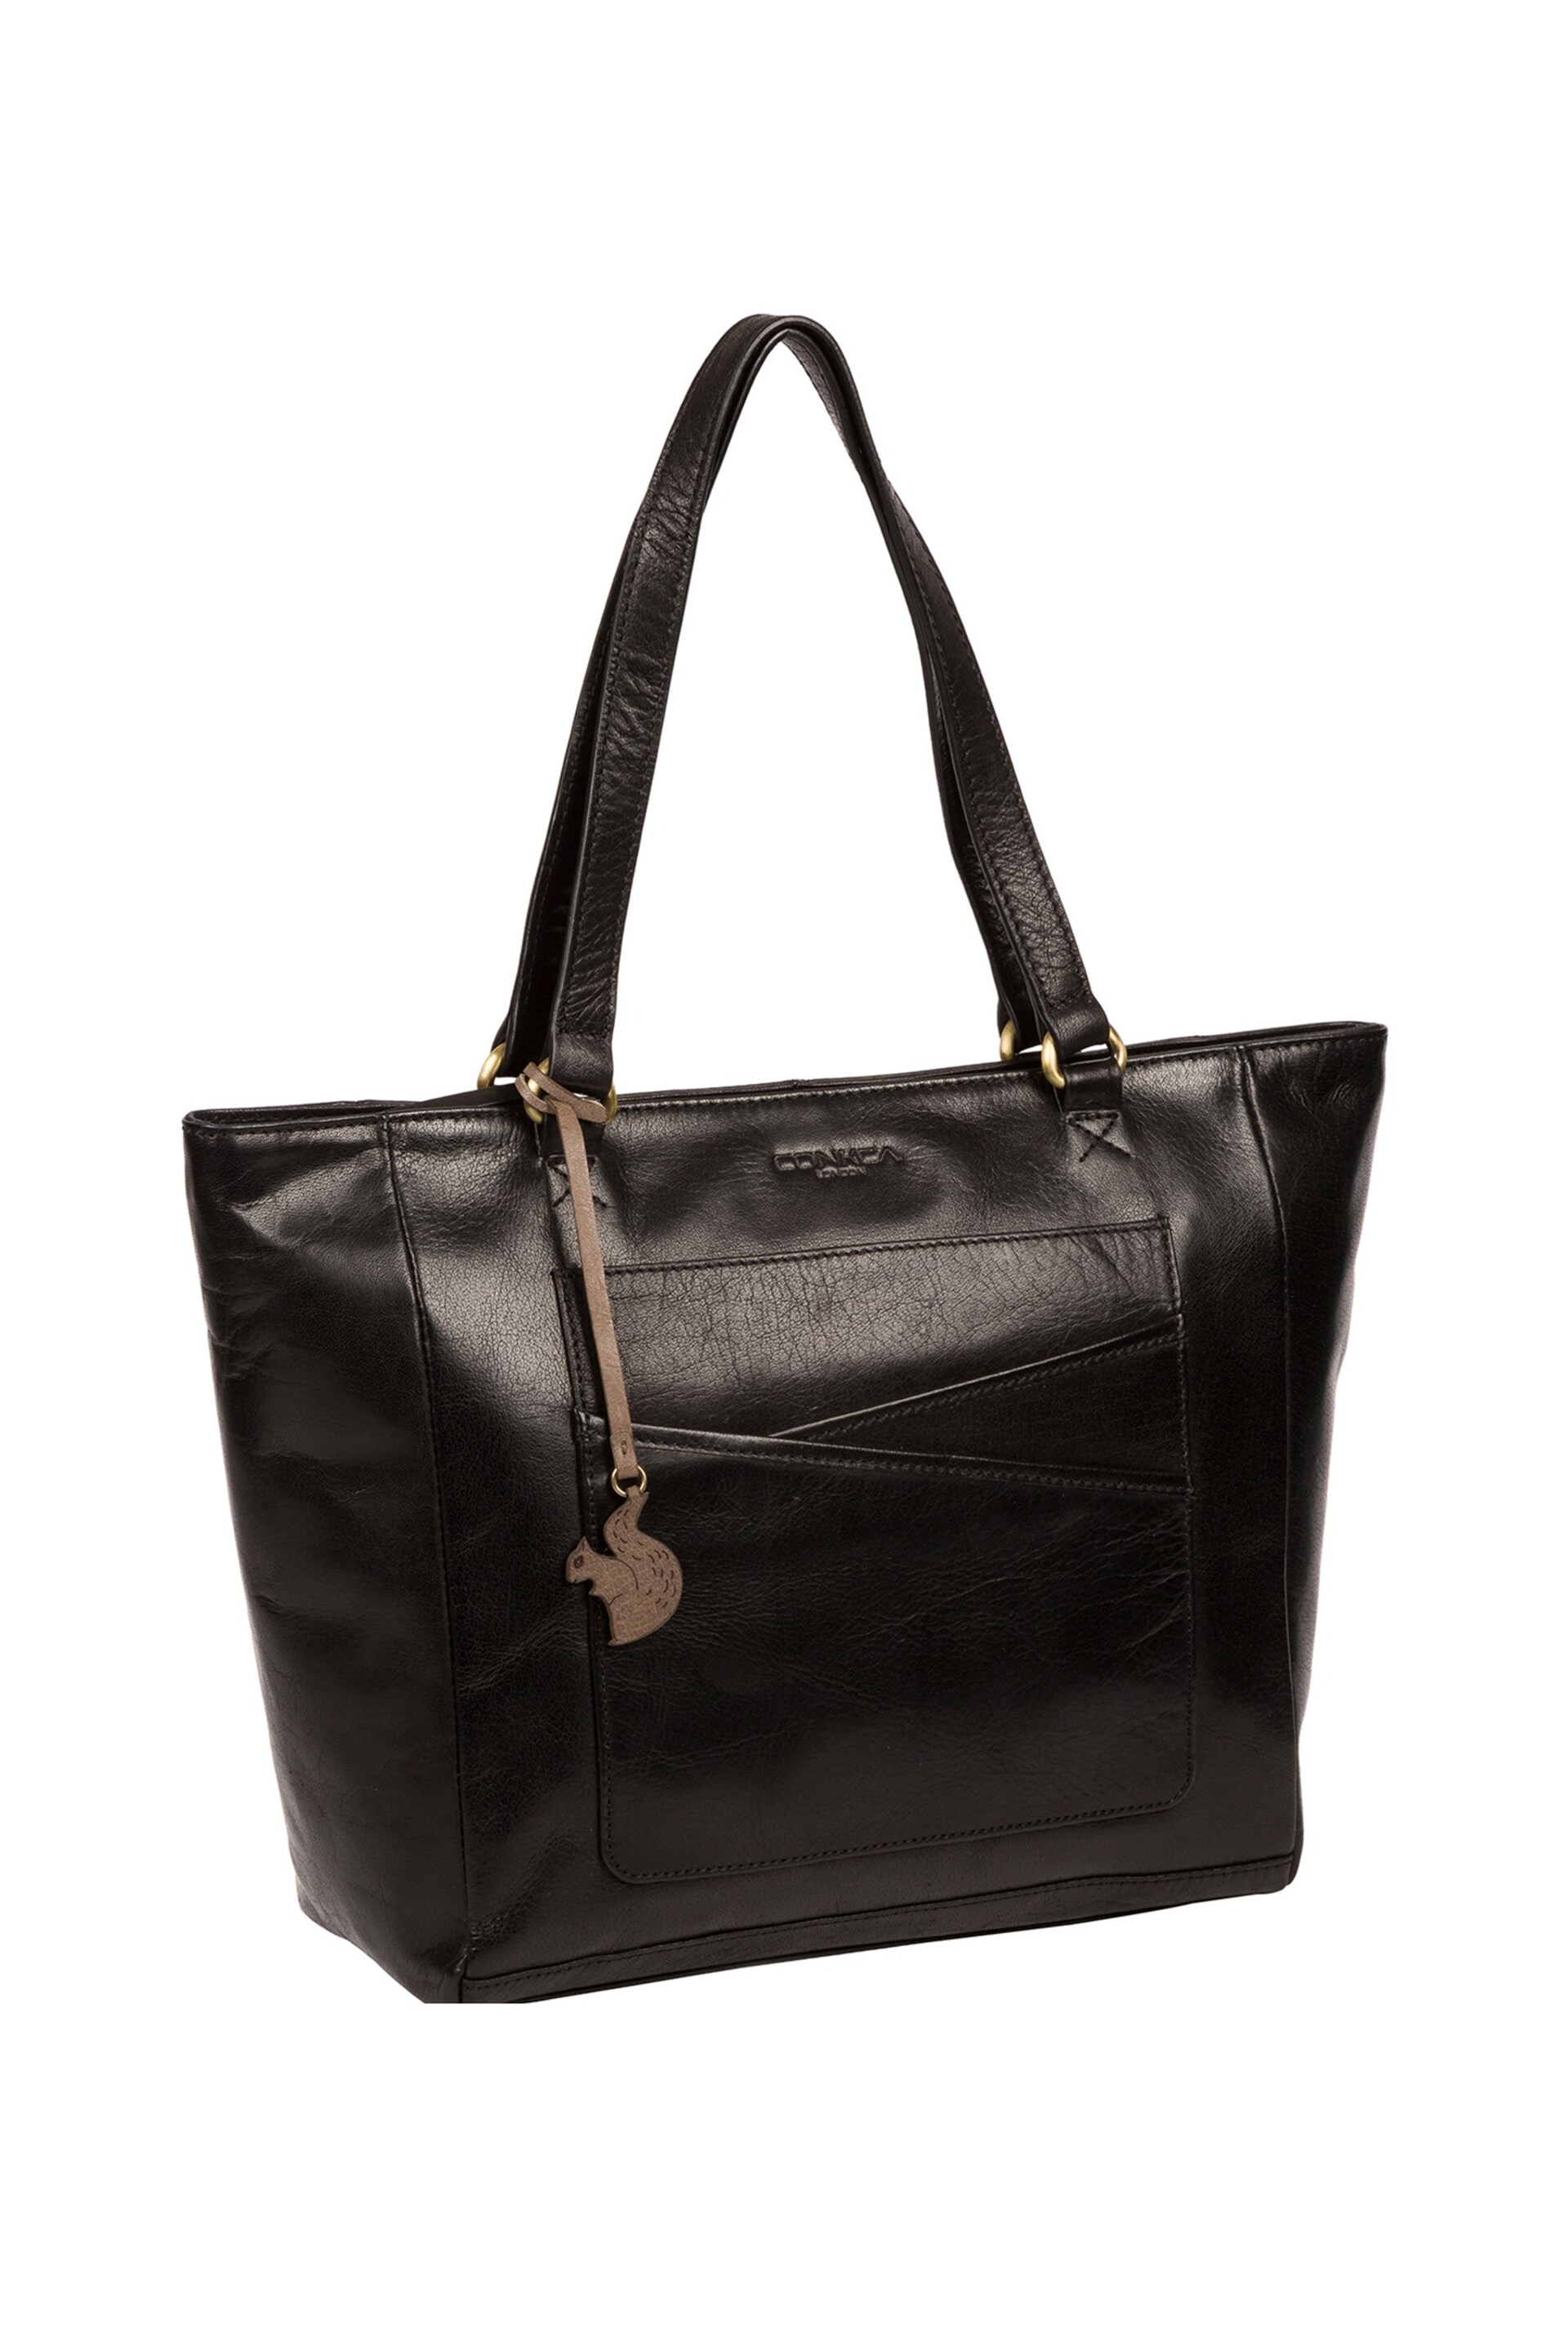 Conkca Monique Leather Tote Bag - Image 3 of 5